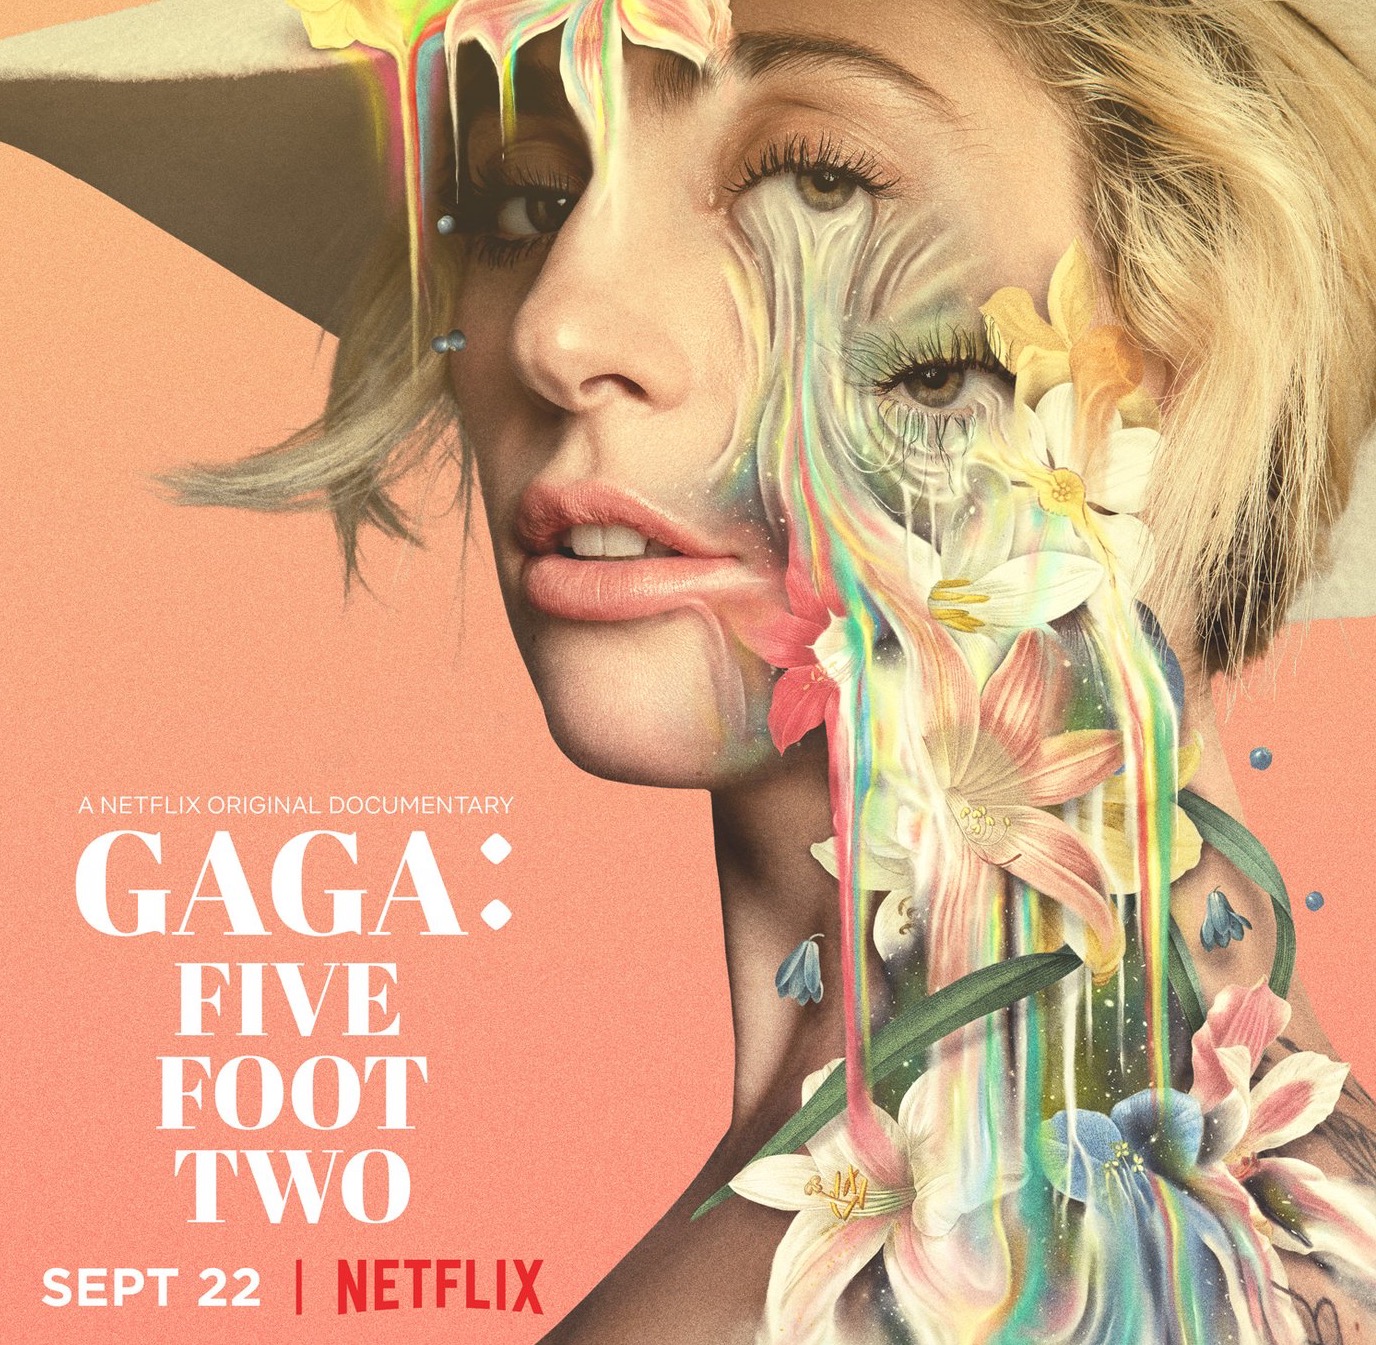 Netflix’s latest documentary chronicles Lady Gaga Electricals Warehouse